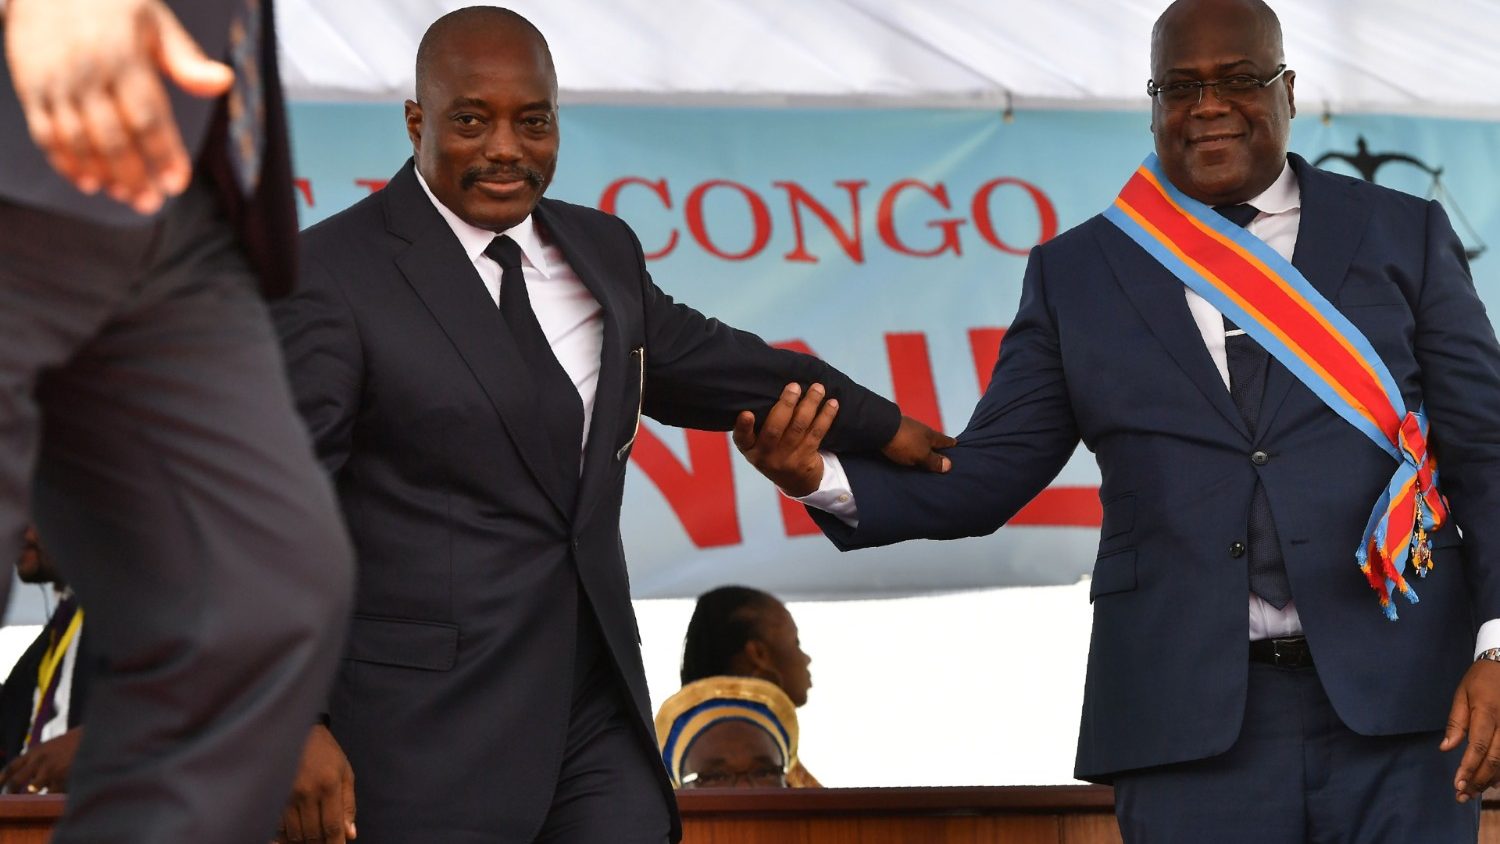 Congo's Felix Tshisekedi in first peaceful power transfer - Vatican News